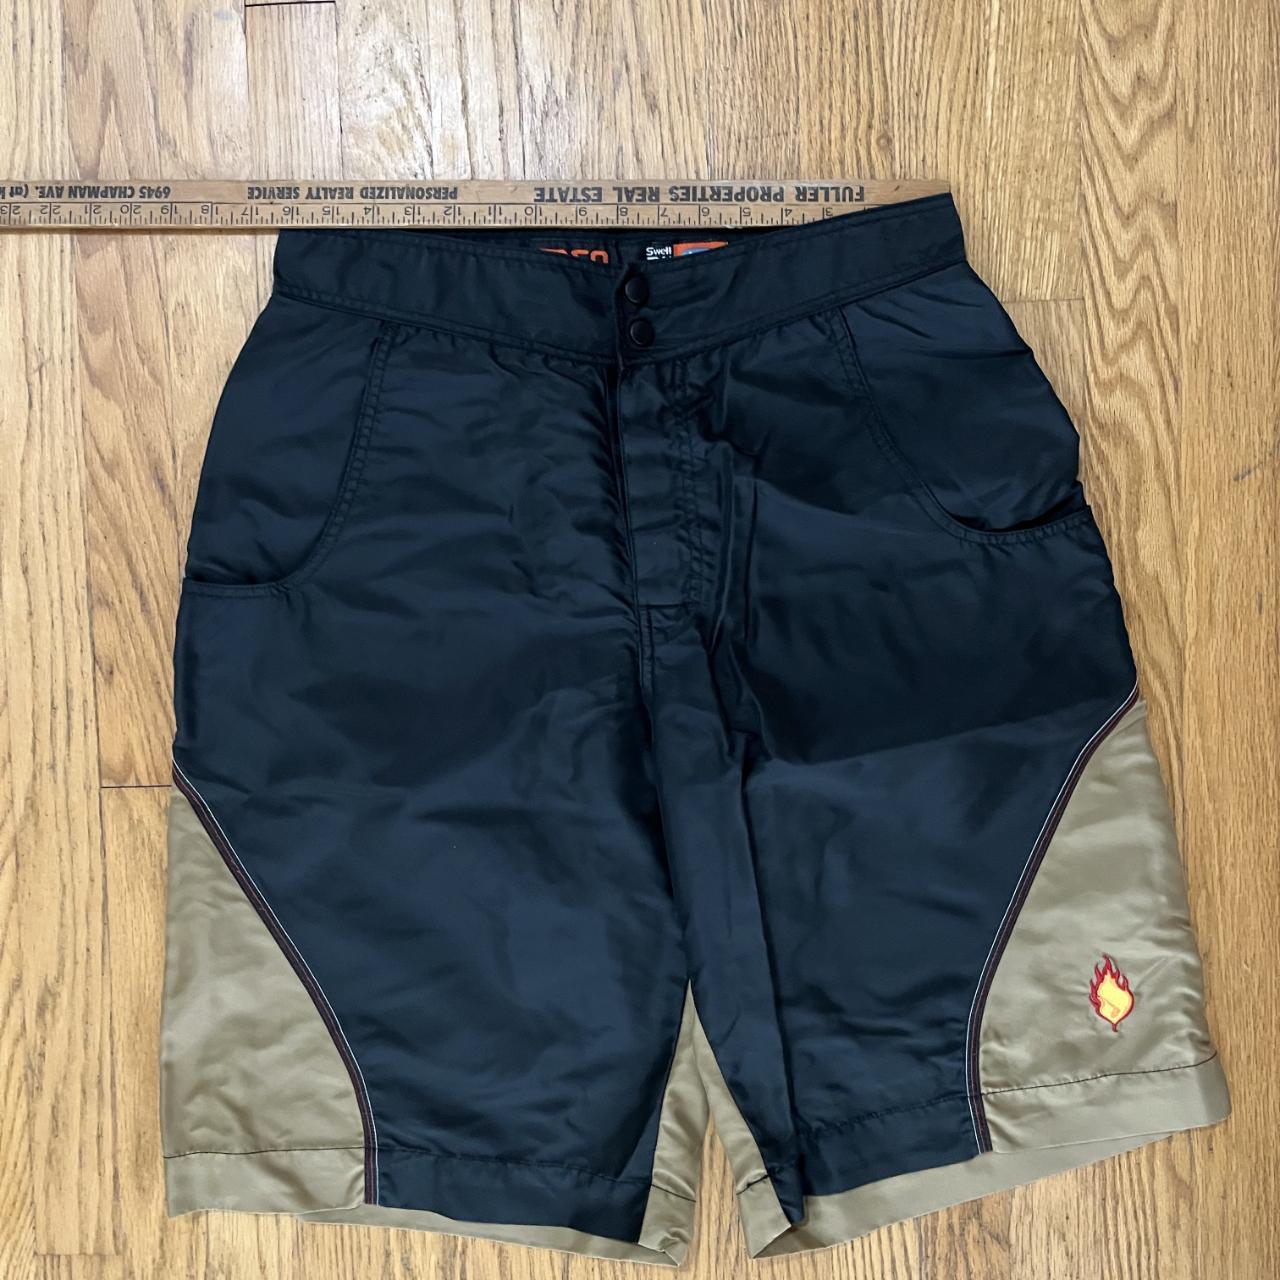 JNCO Men's Black and Tan Shorts | Depop